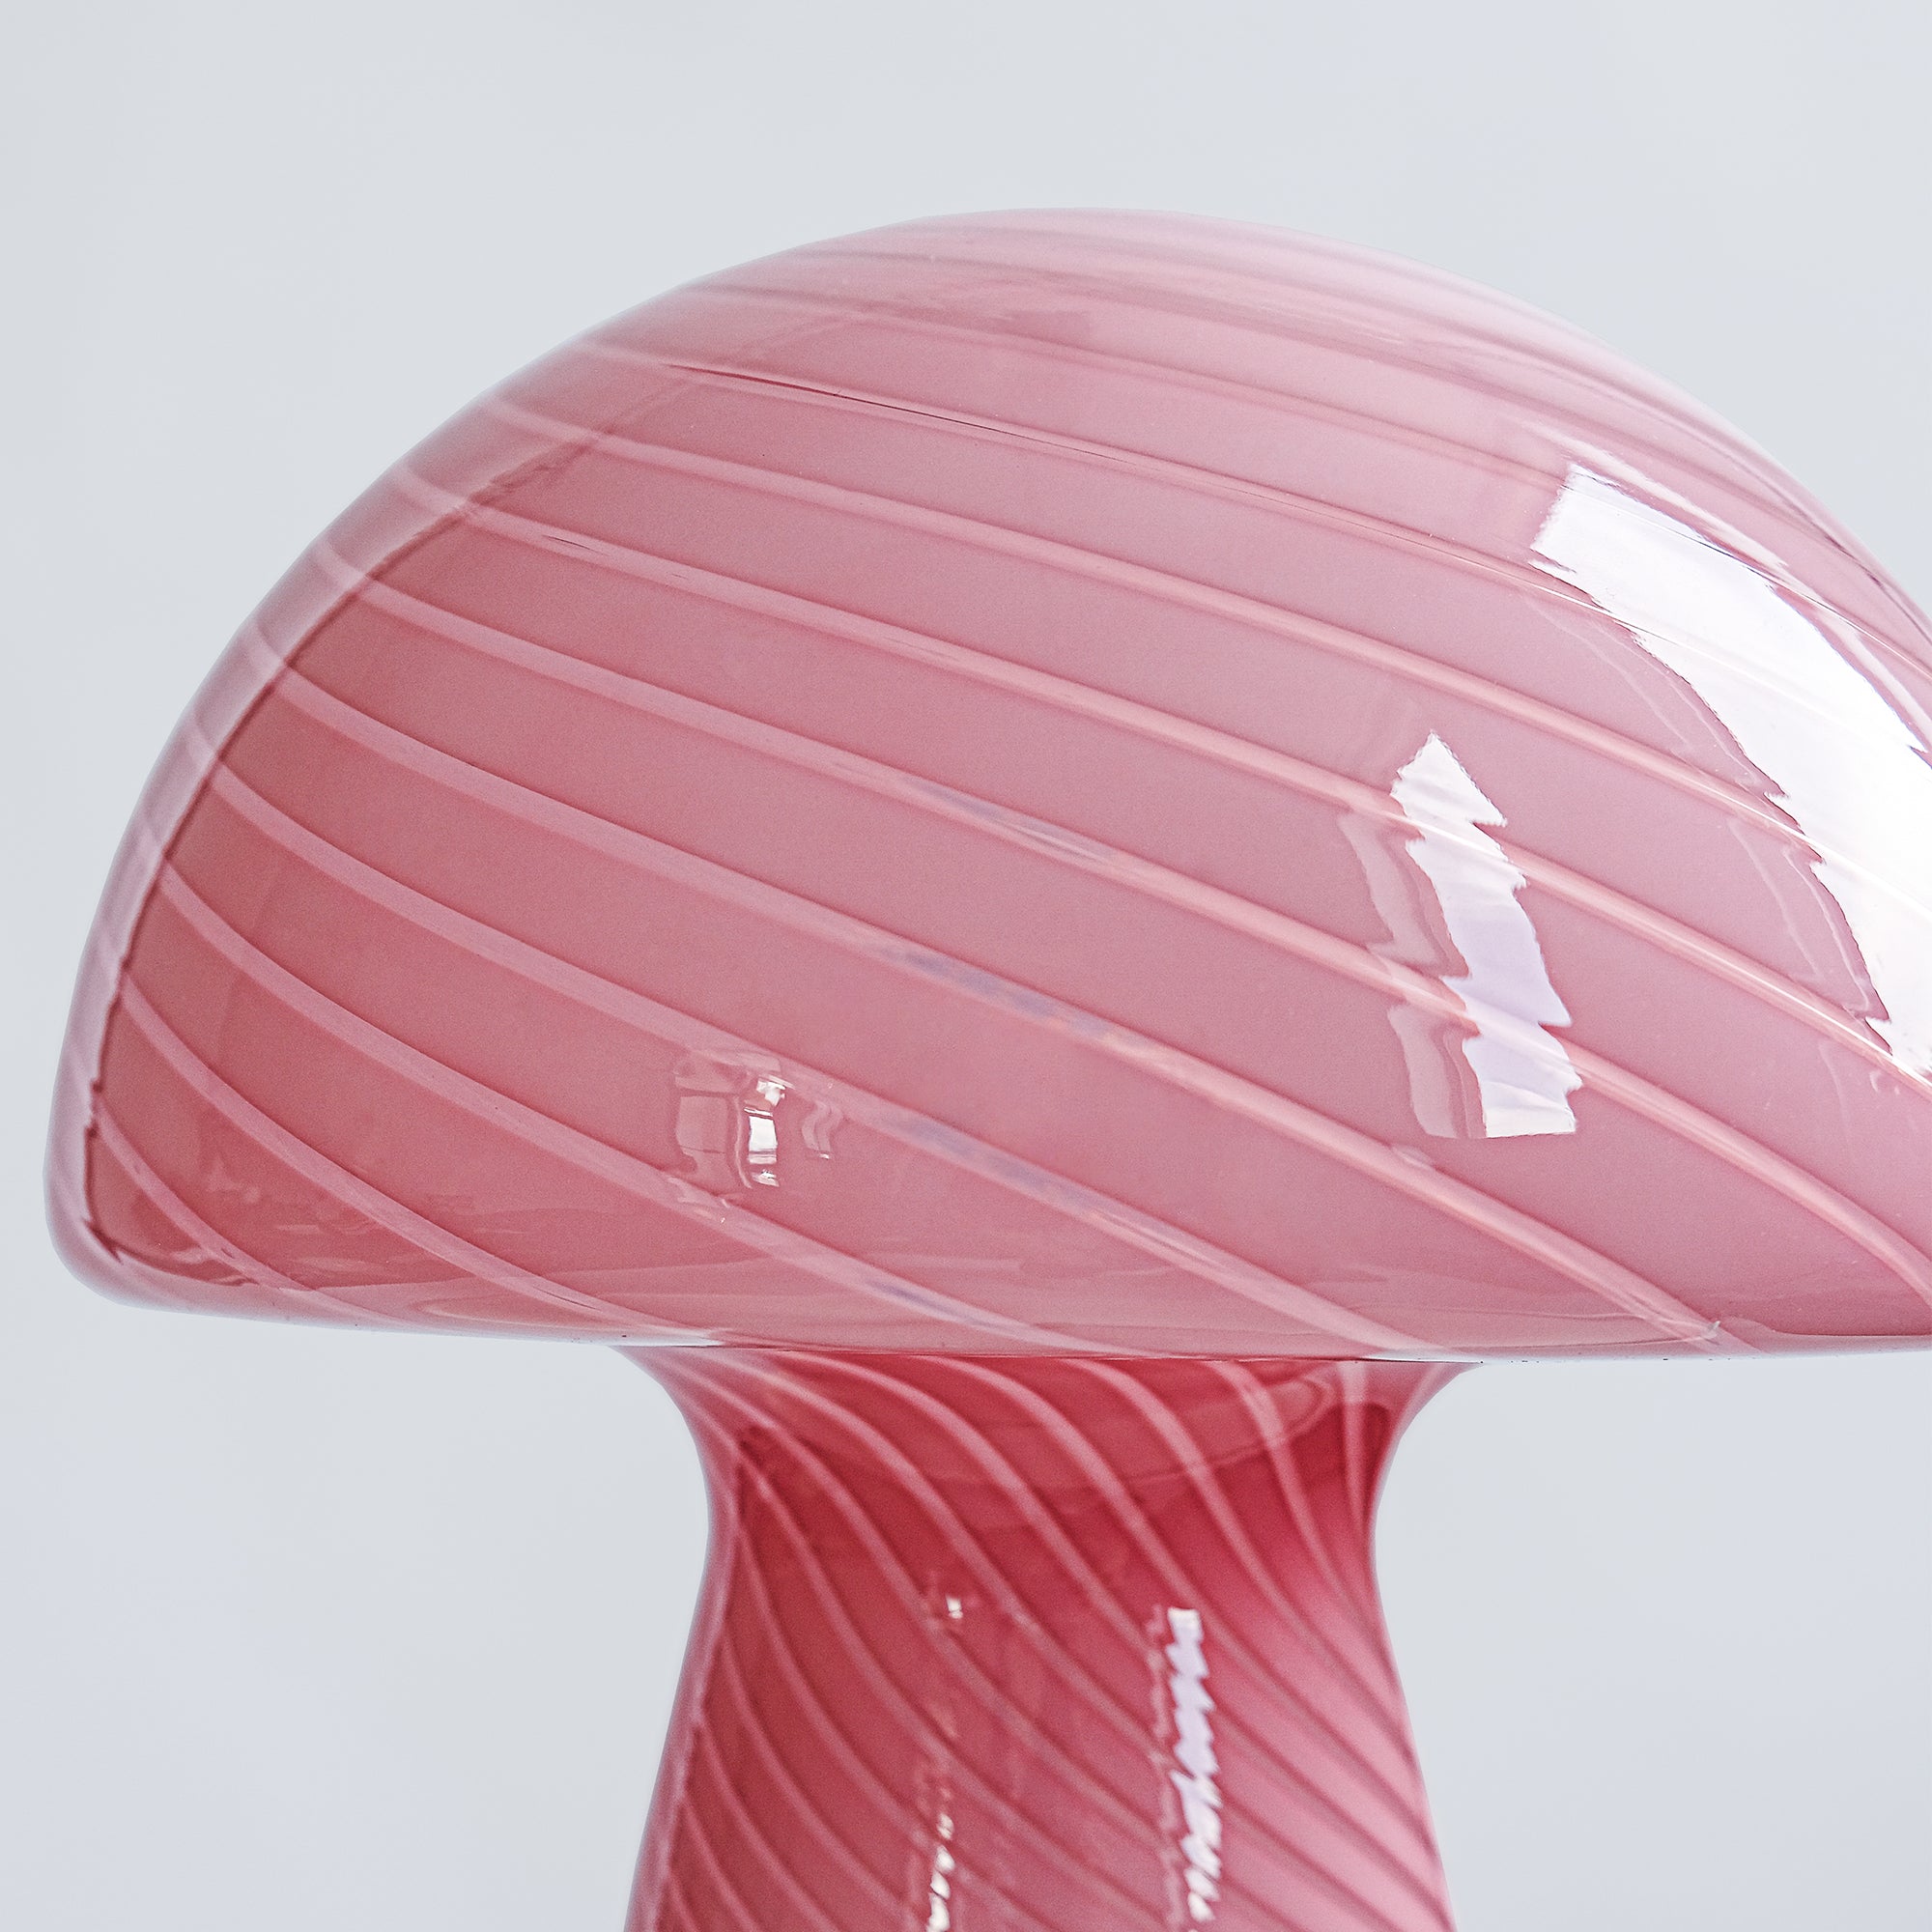 Glass Mushroom Table Lamp, Large Close Top, Pink